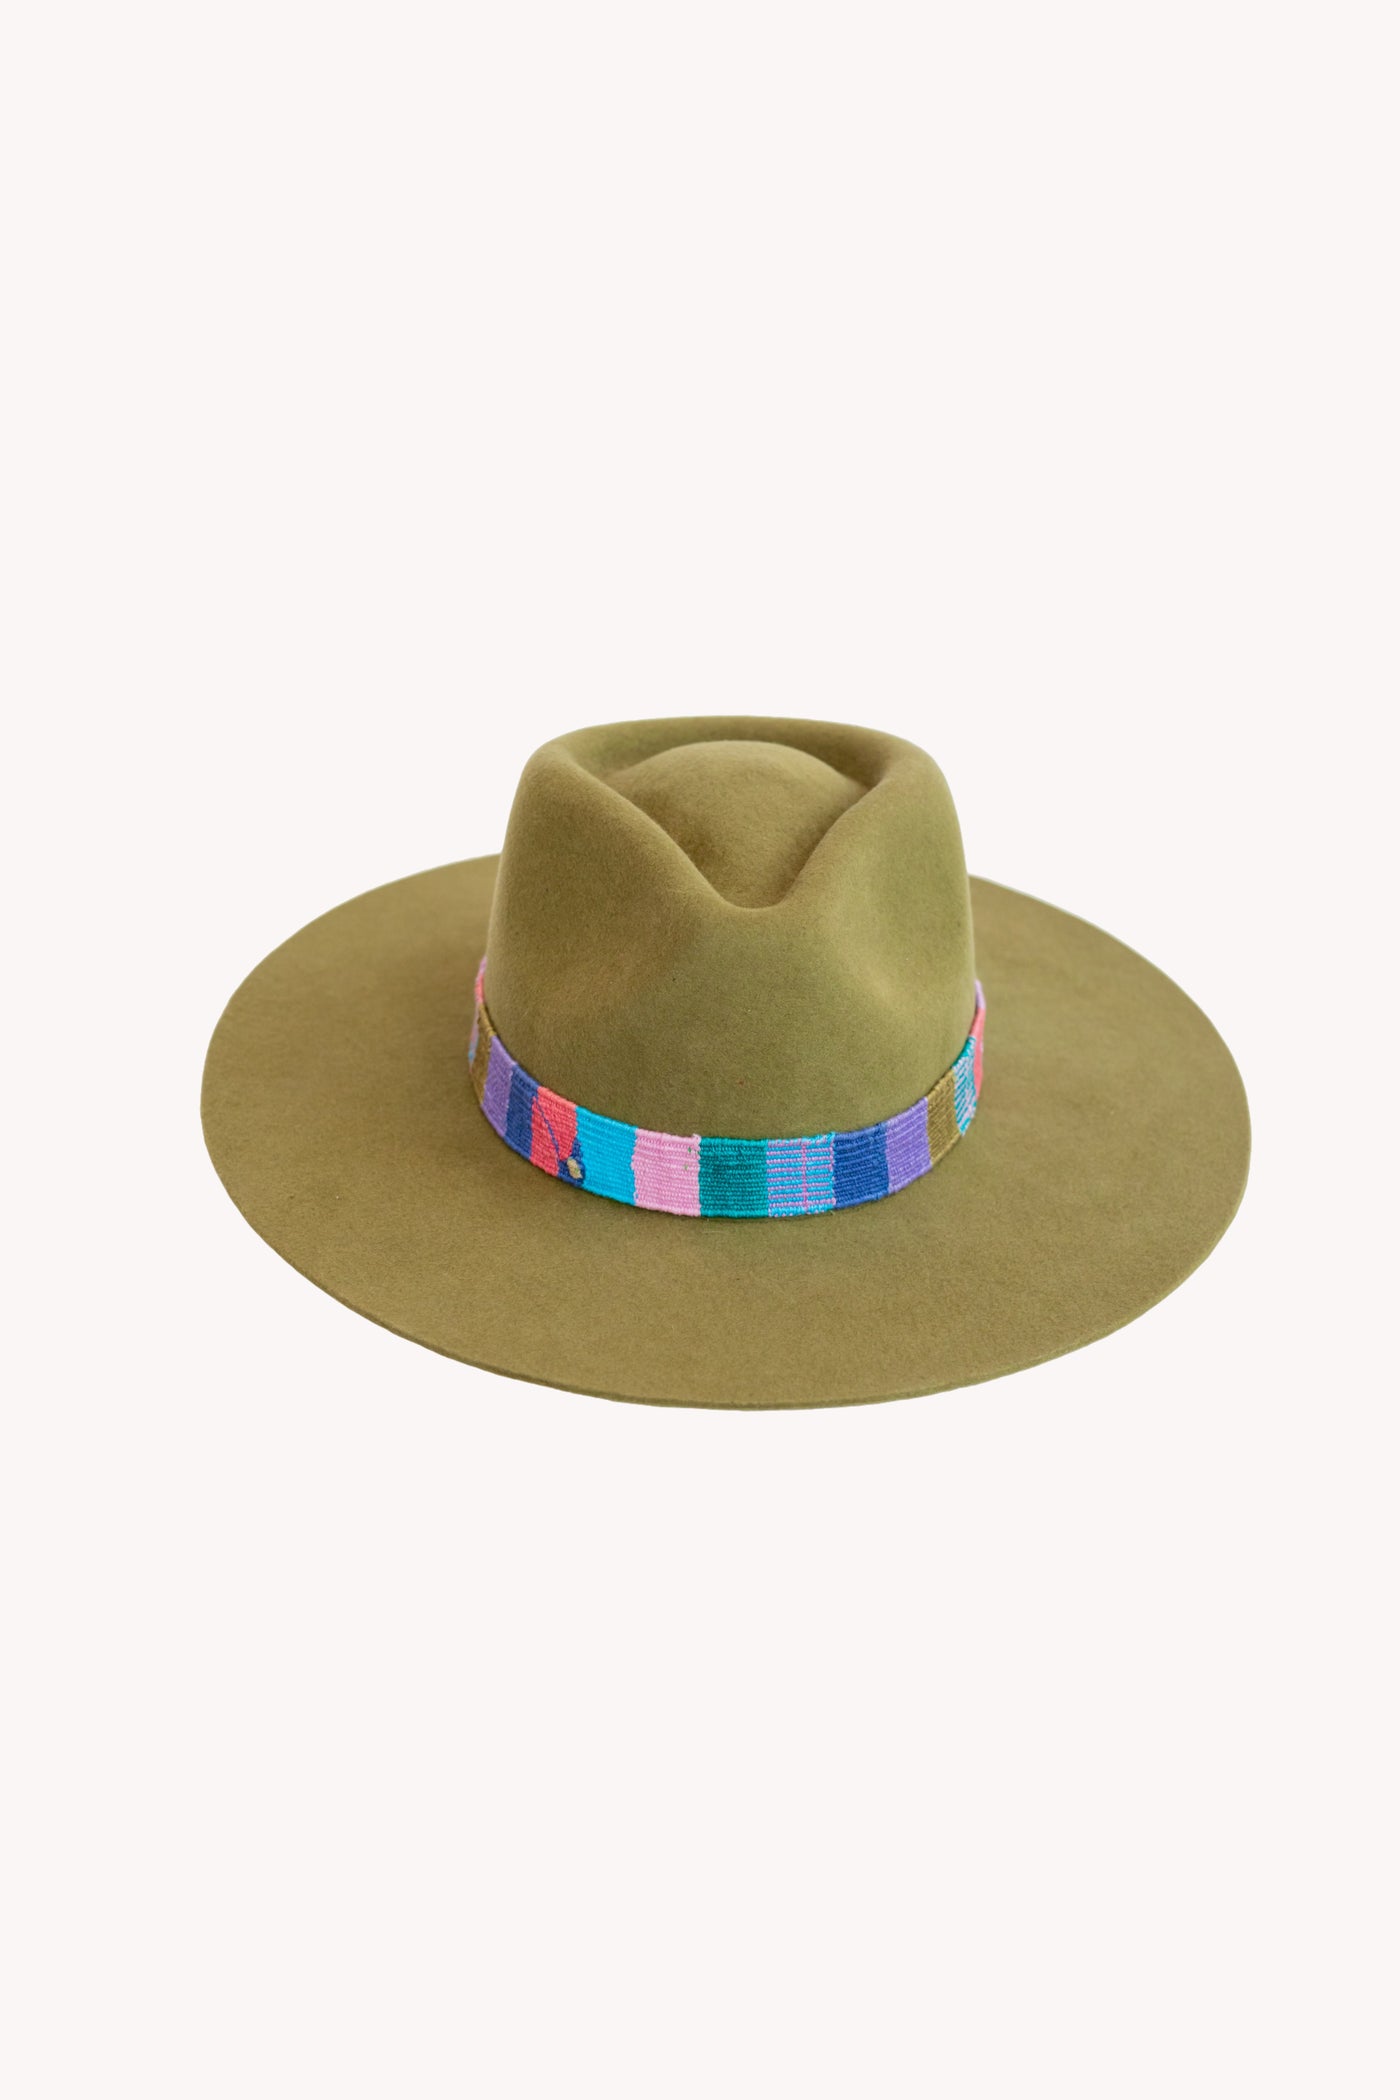 green western style hat